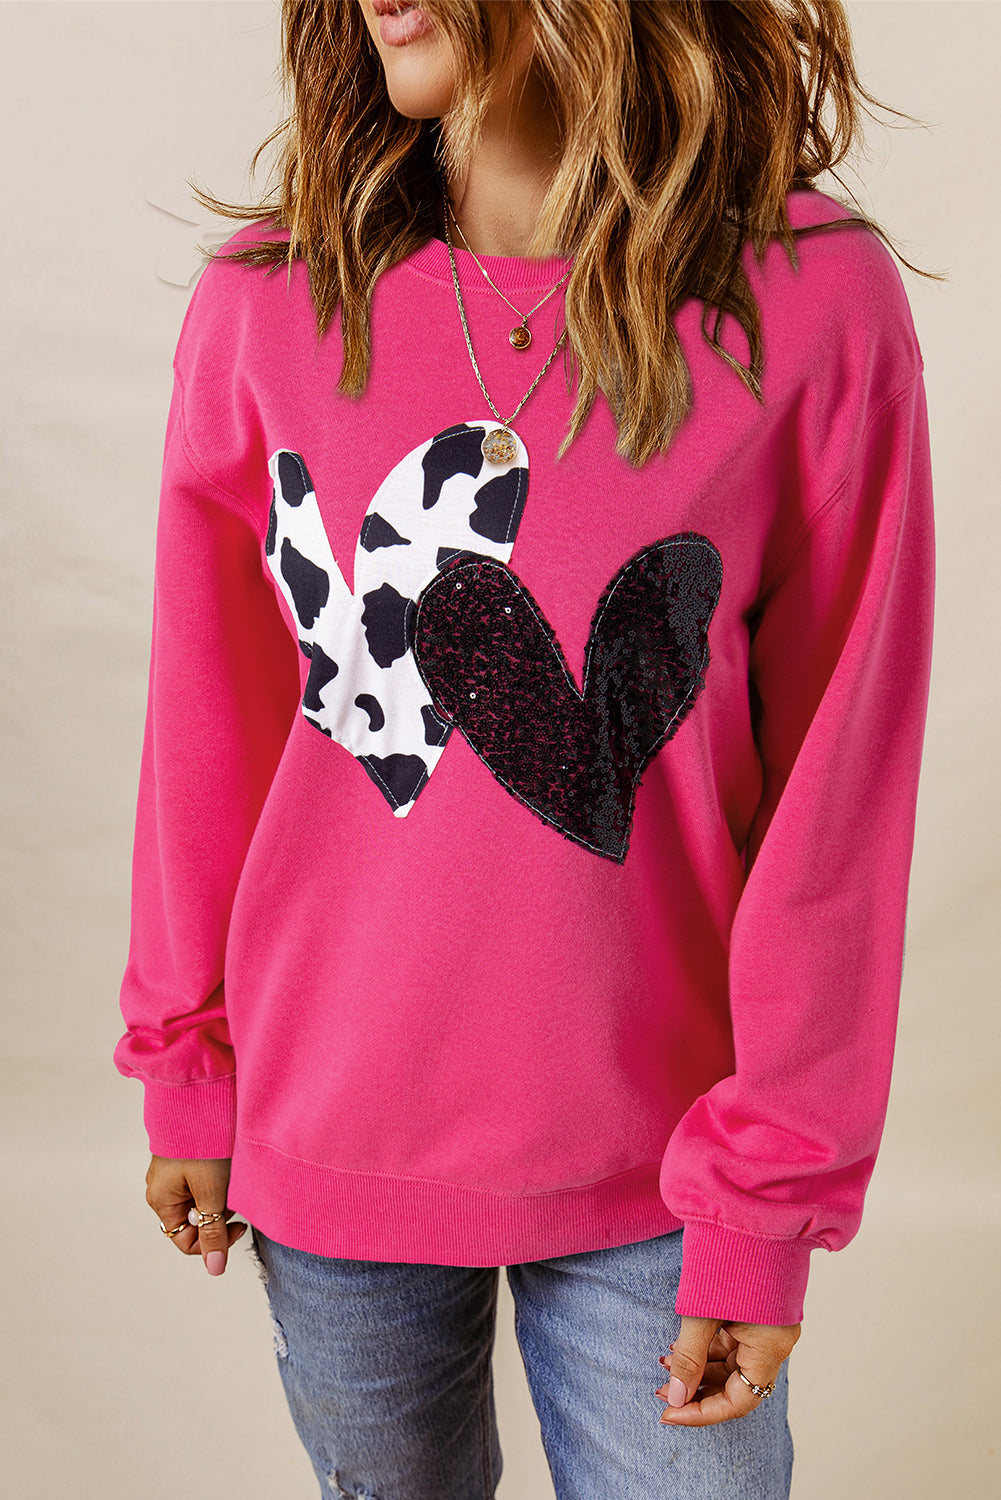 Krava jagodasto ružičasta i šljokičasta majica s dvostrukim zakrpama u obliku srca